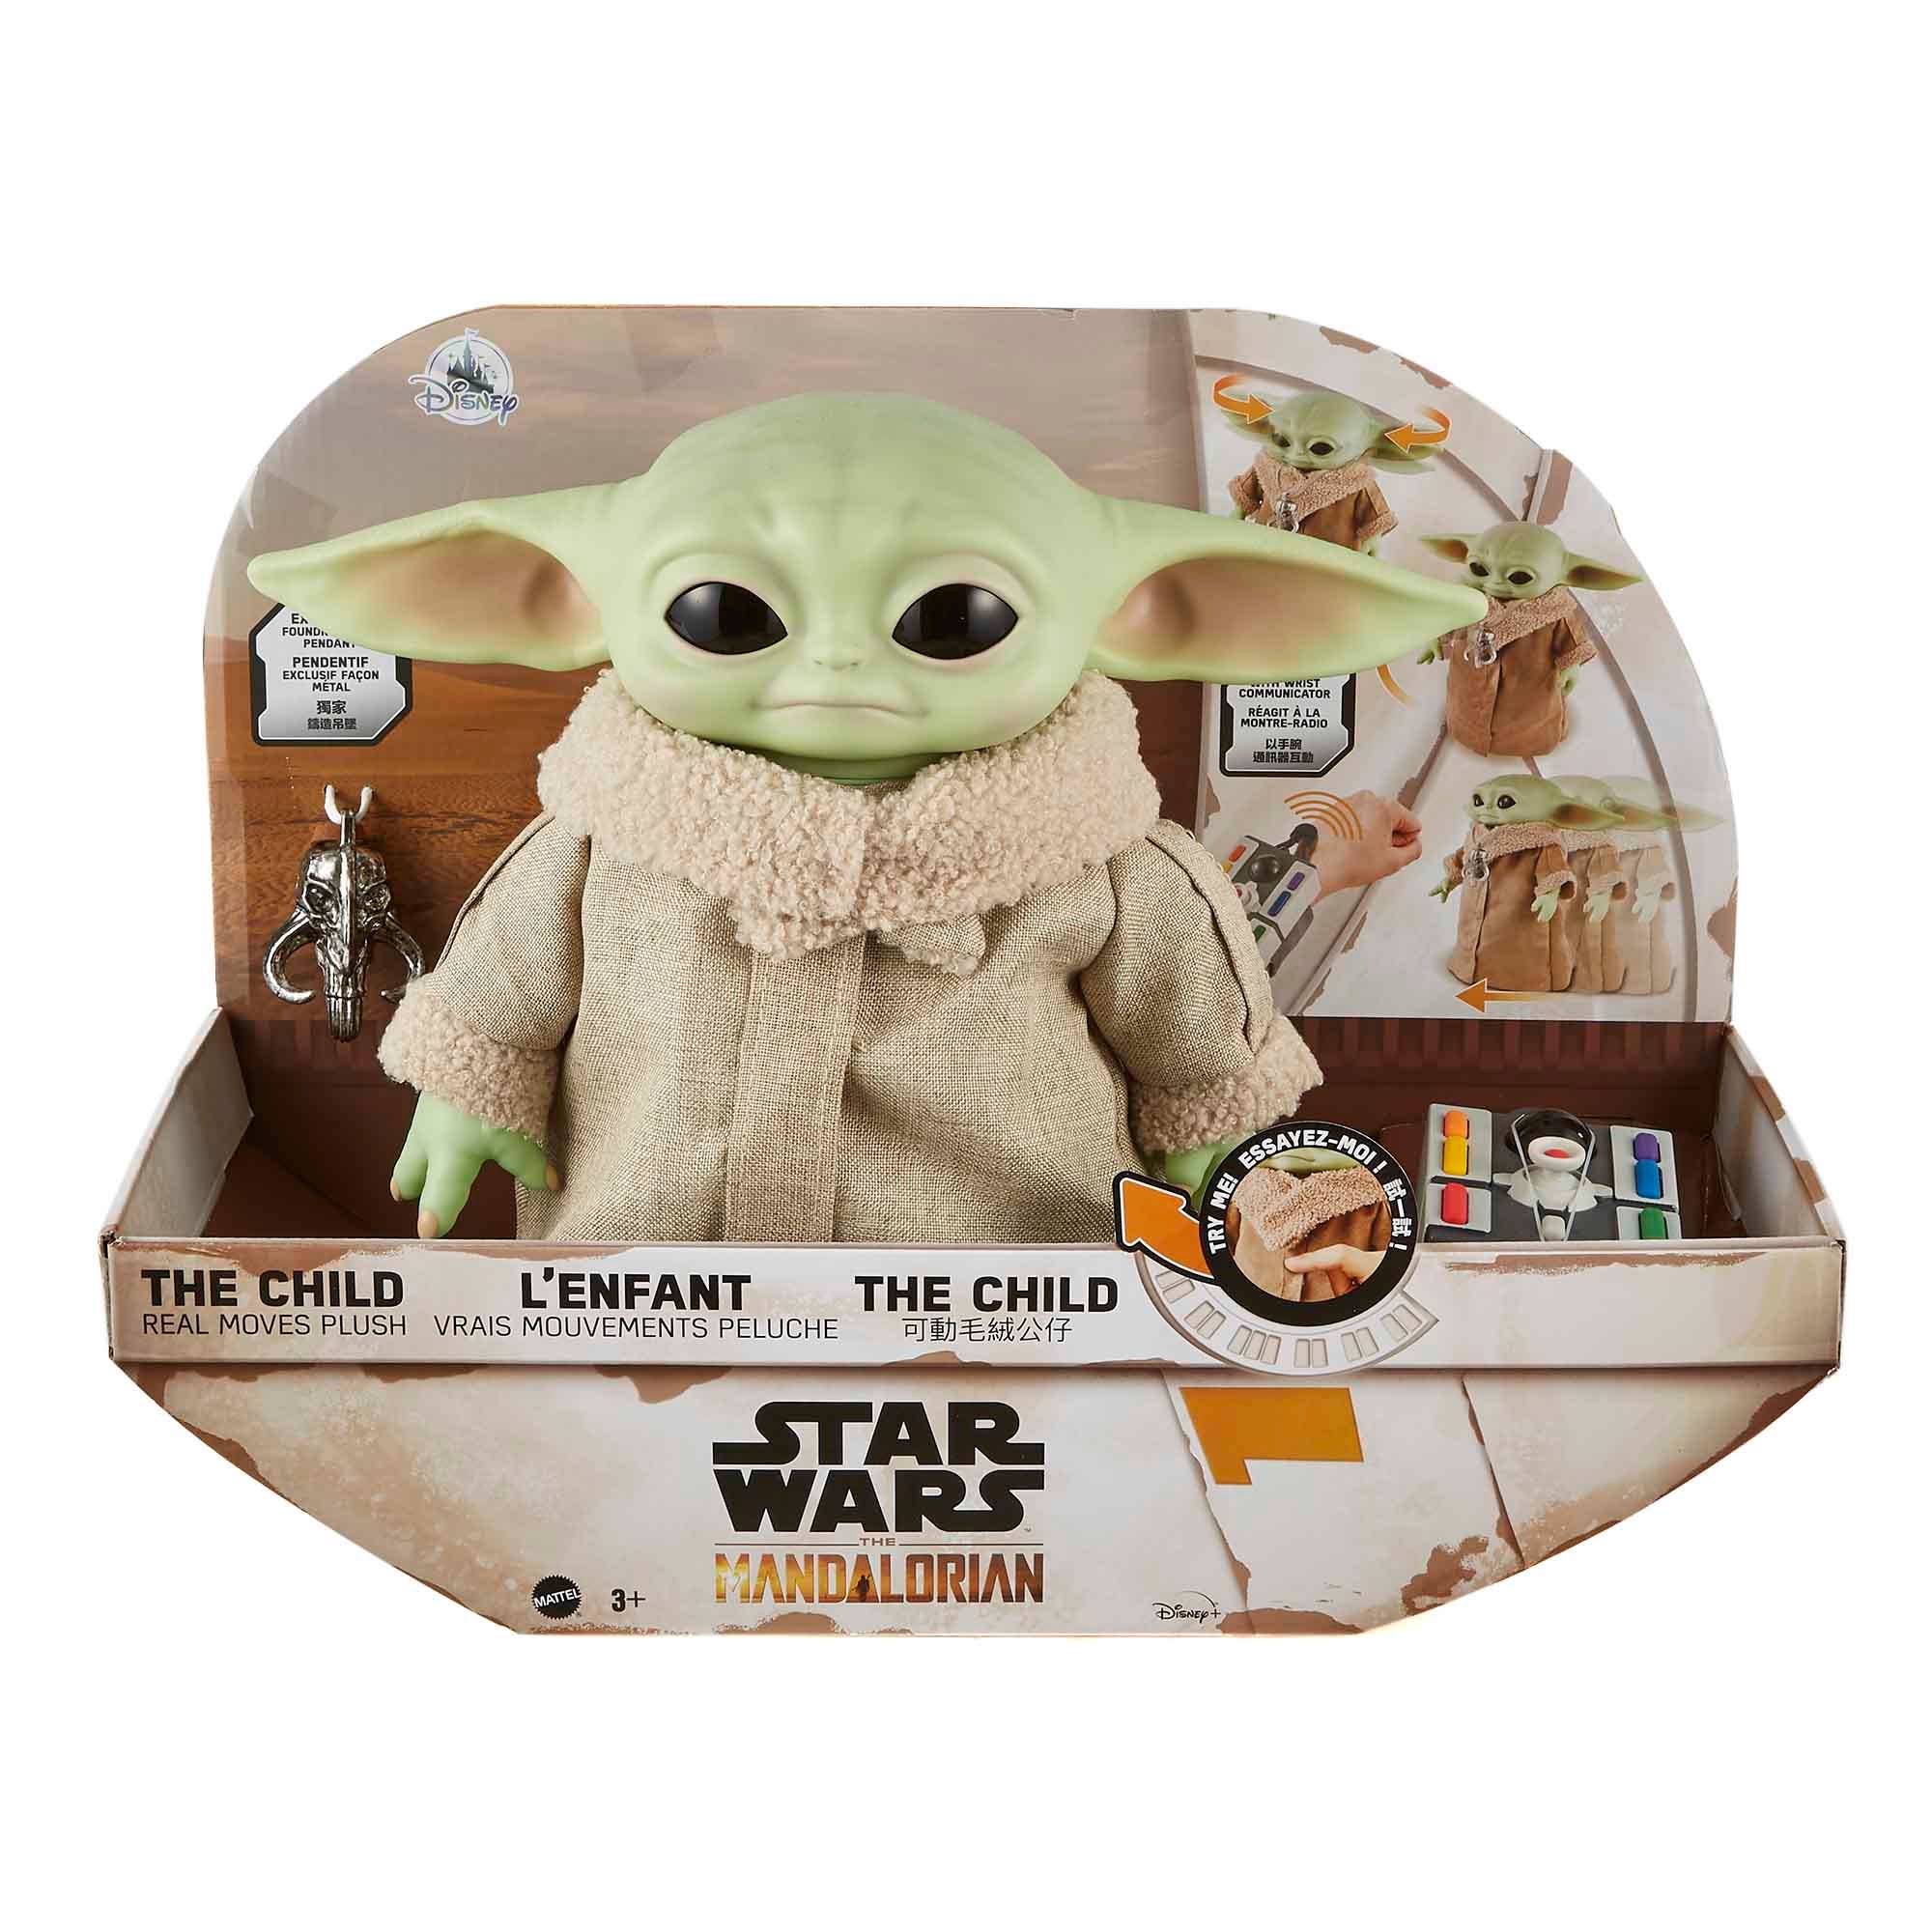 The Mandalorian Spawned A Disney Marketing Force With Baby Yoda